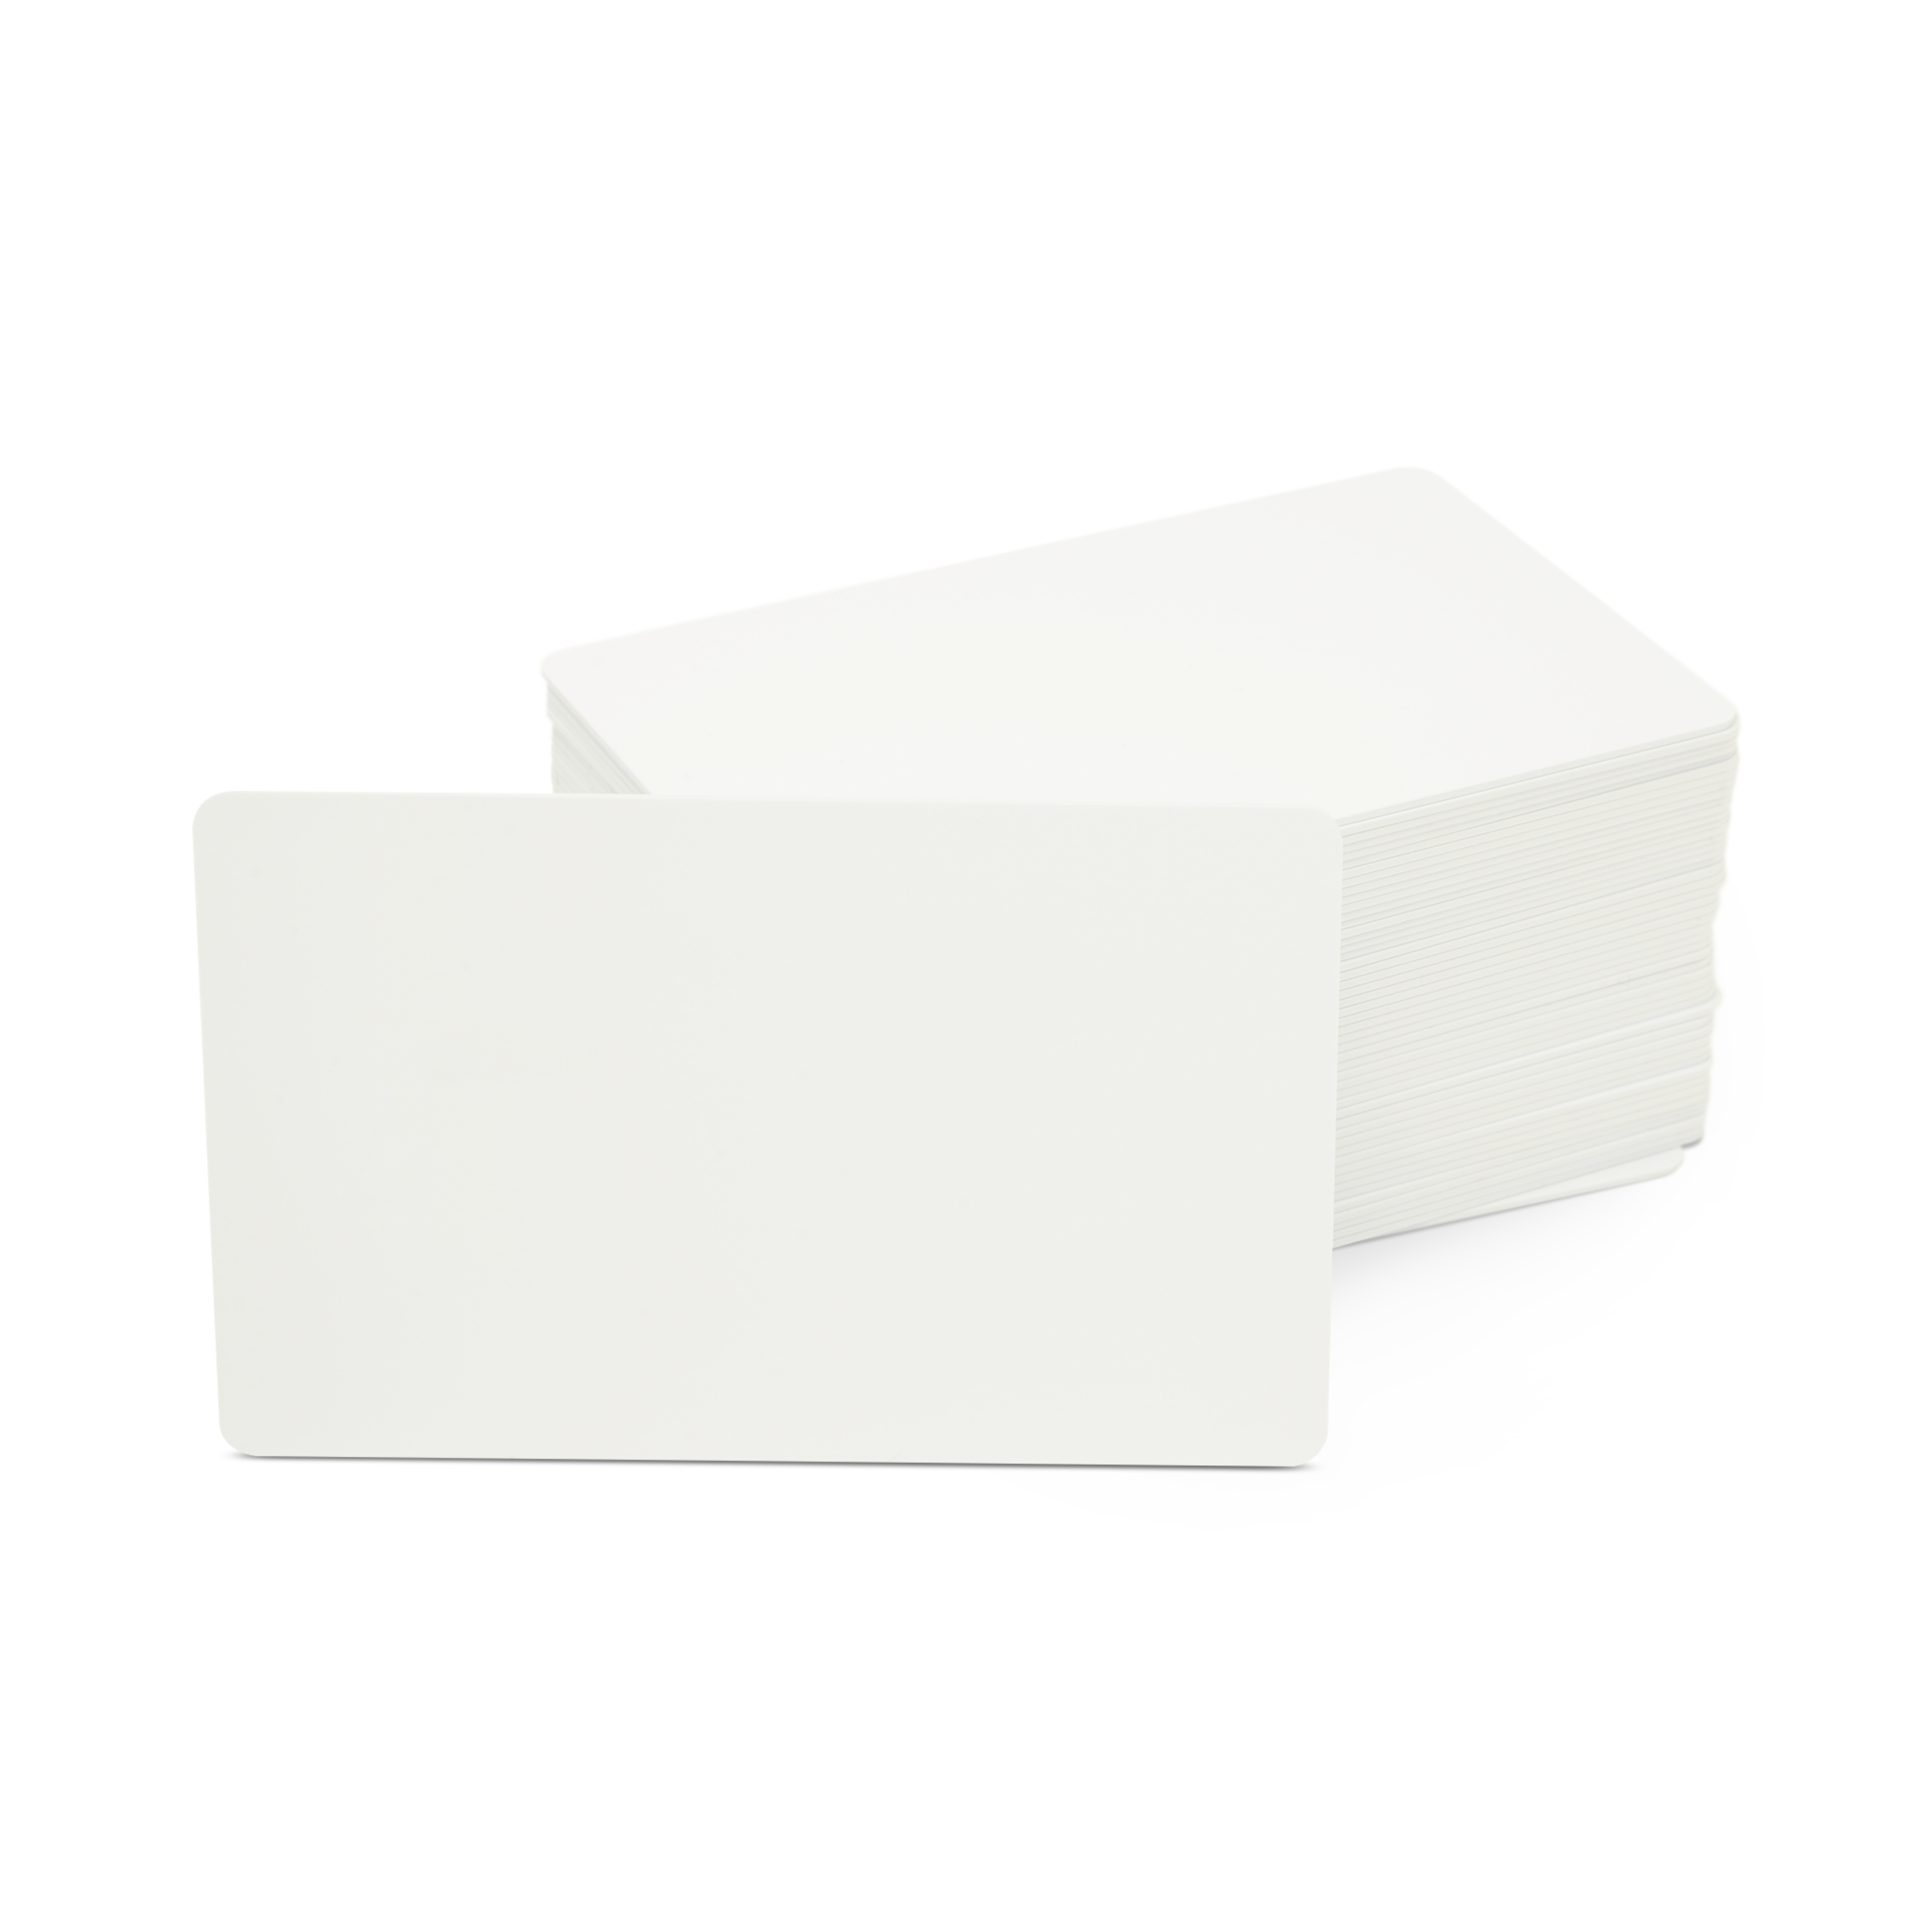 NFC Card PVC - 85,6 x 54 mm - NTAG413 - 160 Byte - white